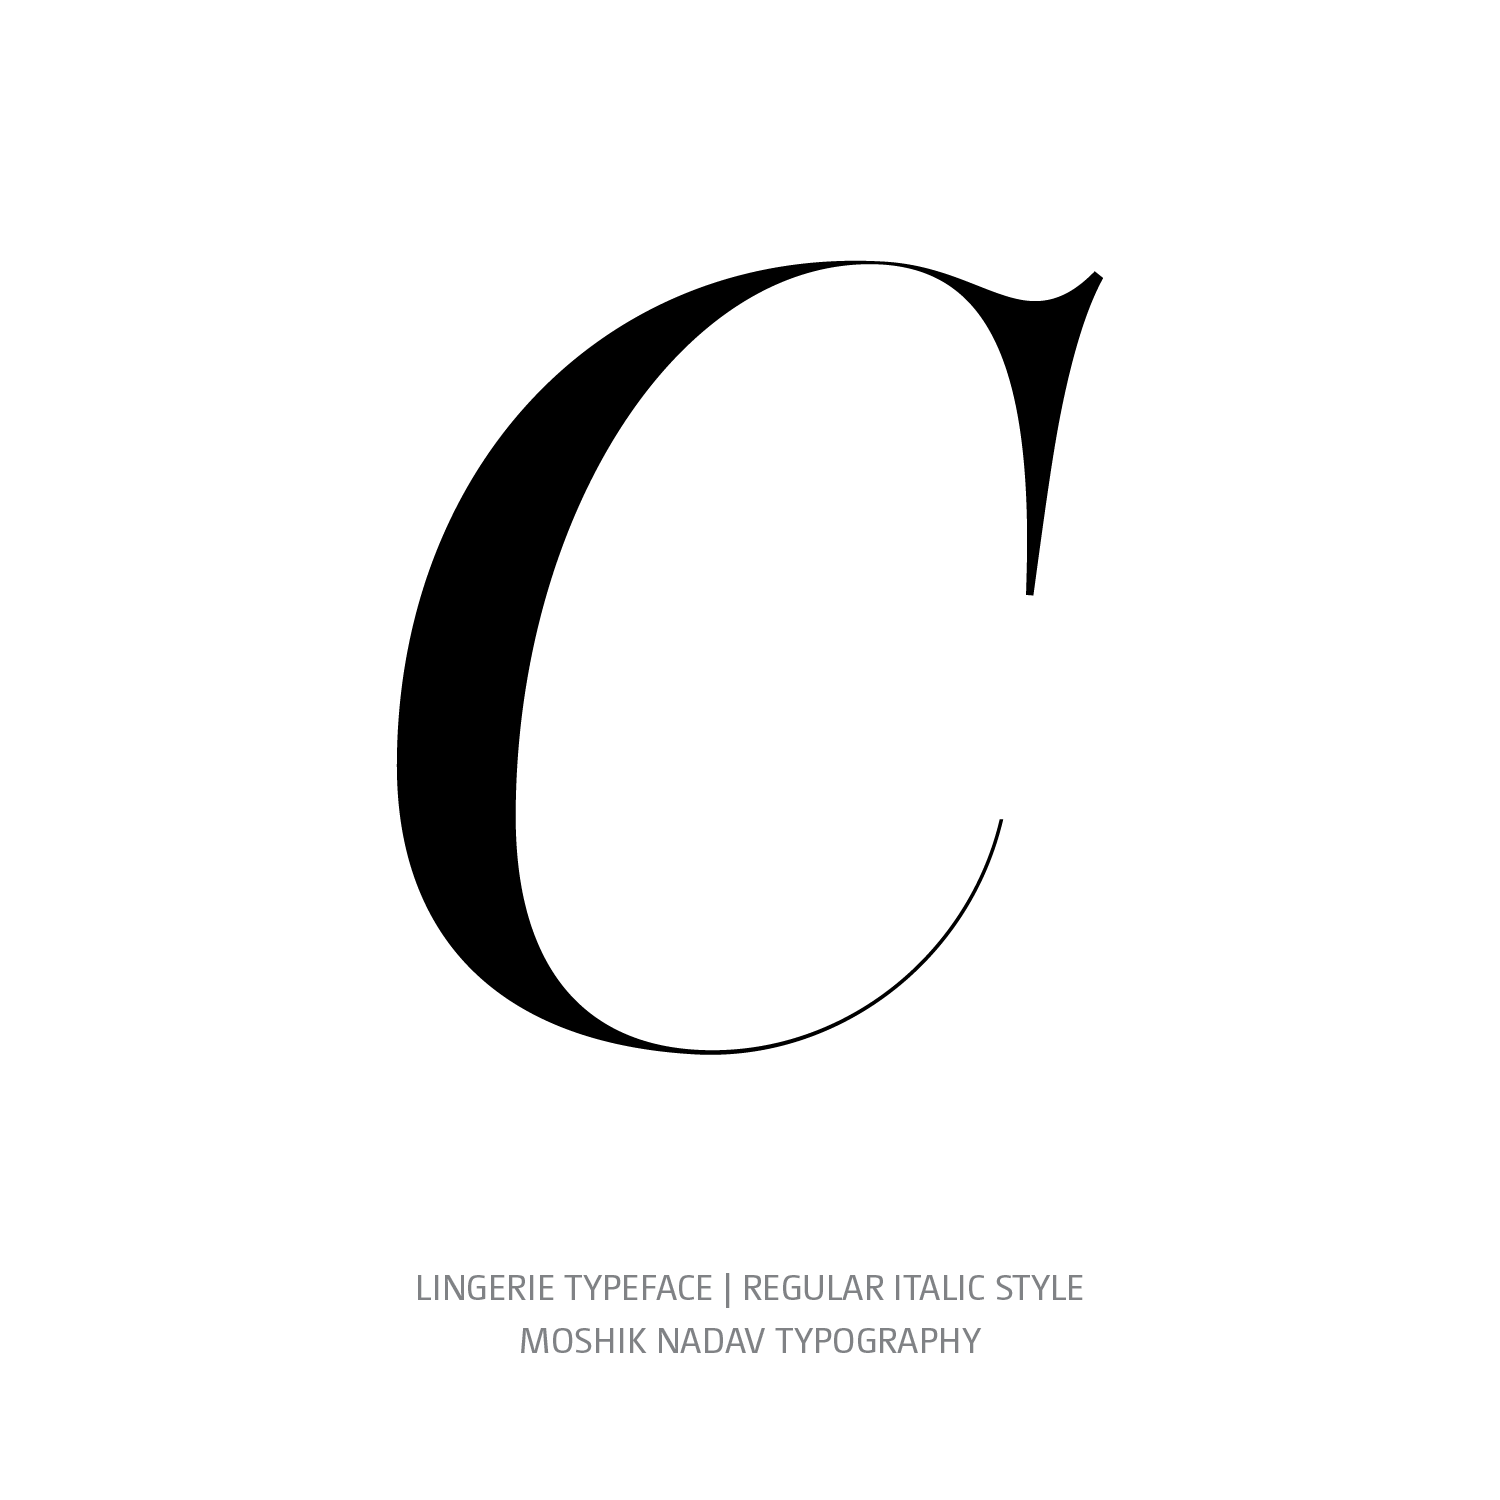 Lingerie Typeface Regular Italic C- Fashion fonts by Moshik Nadav Typography